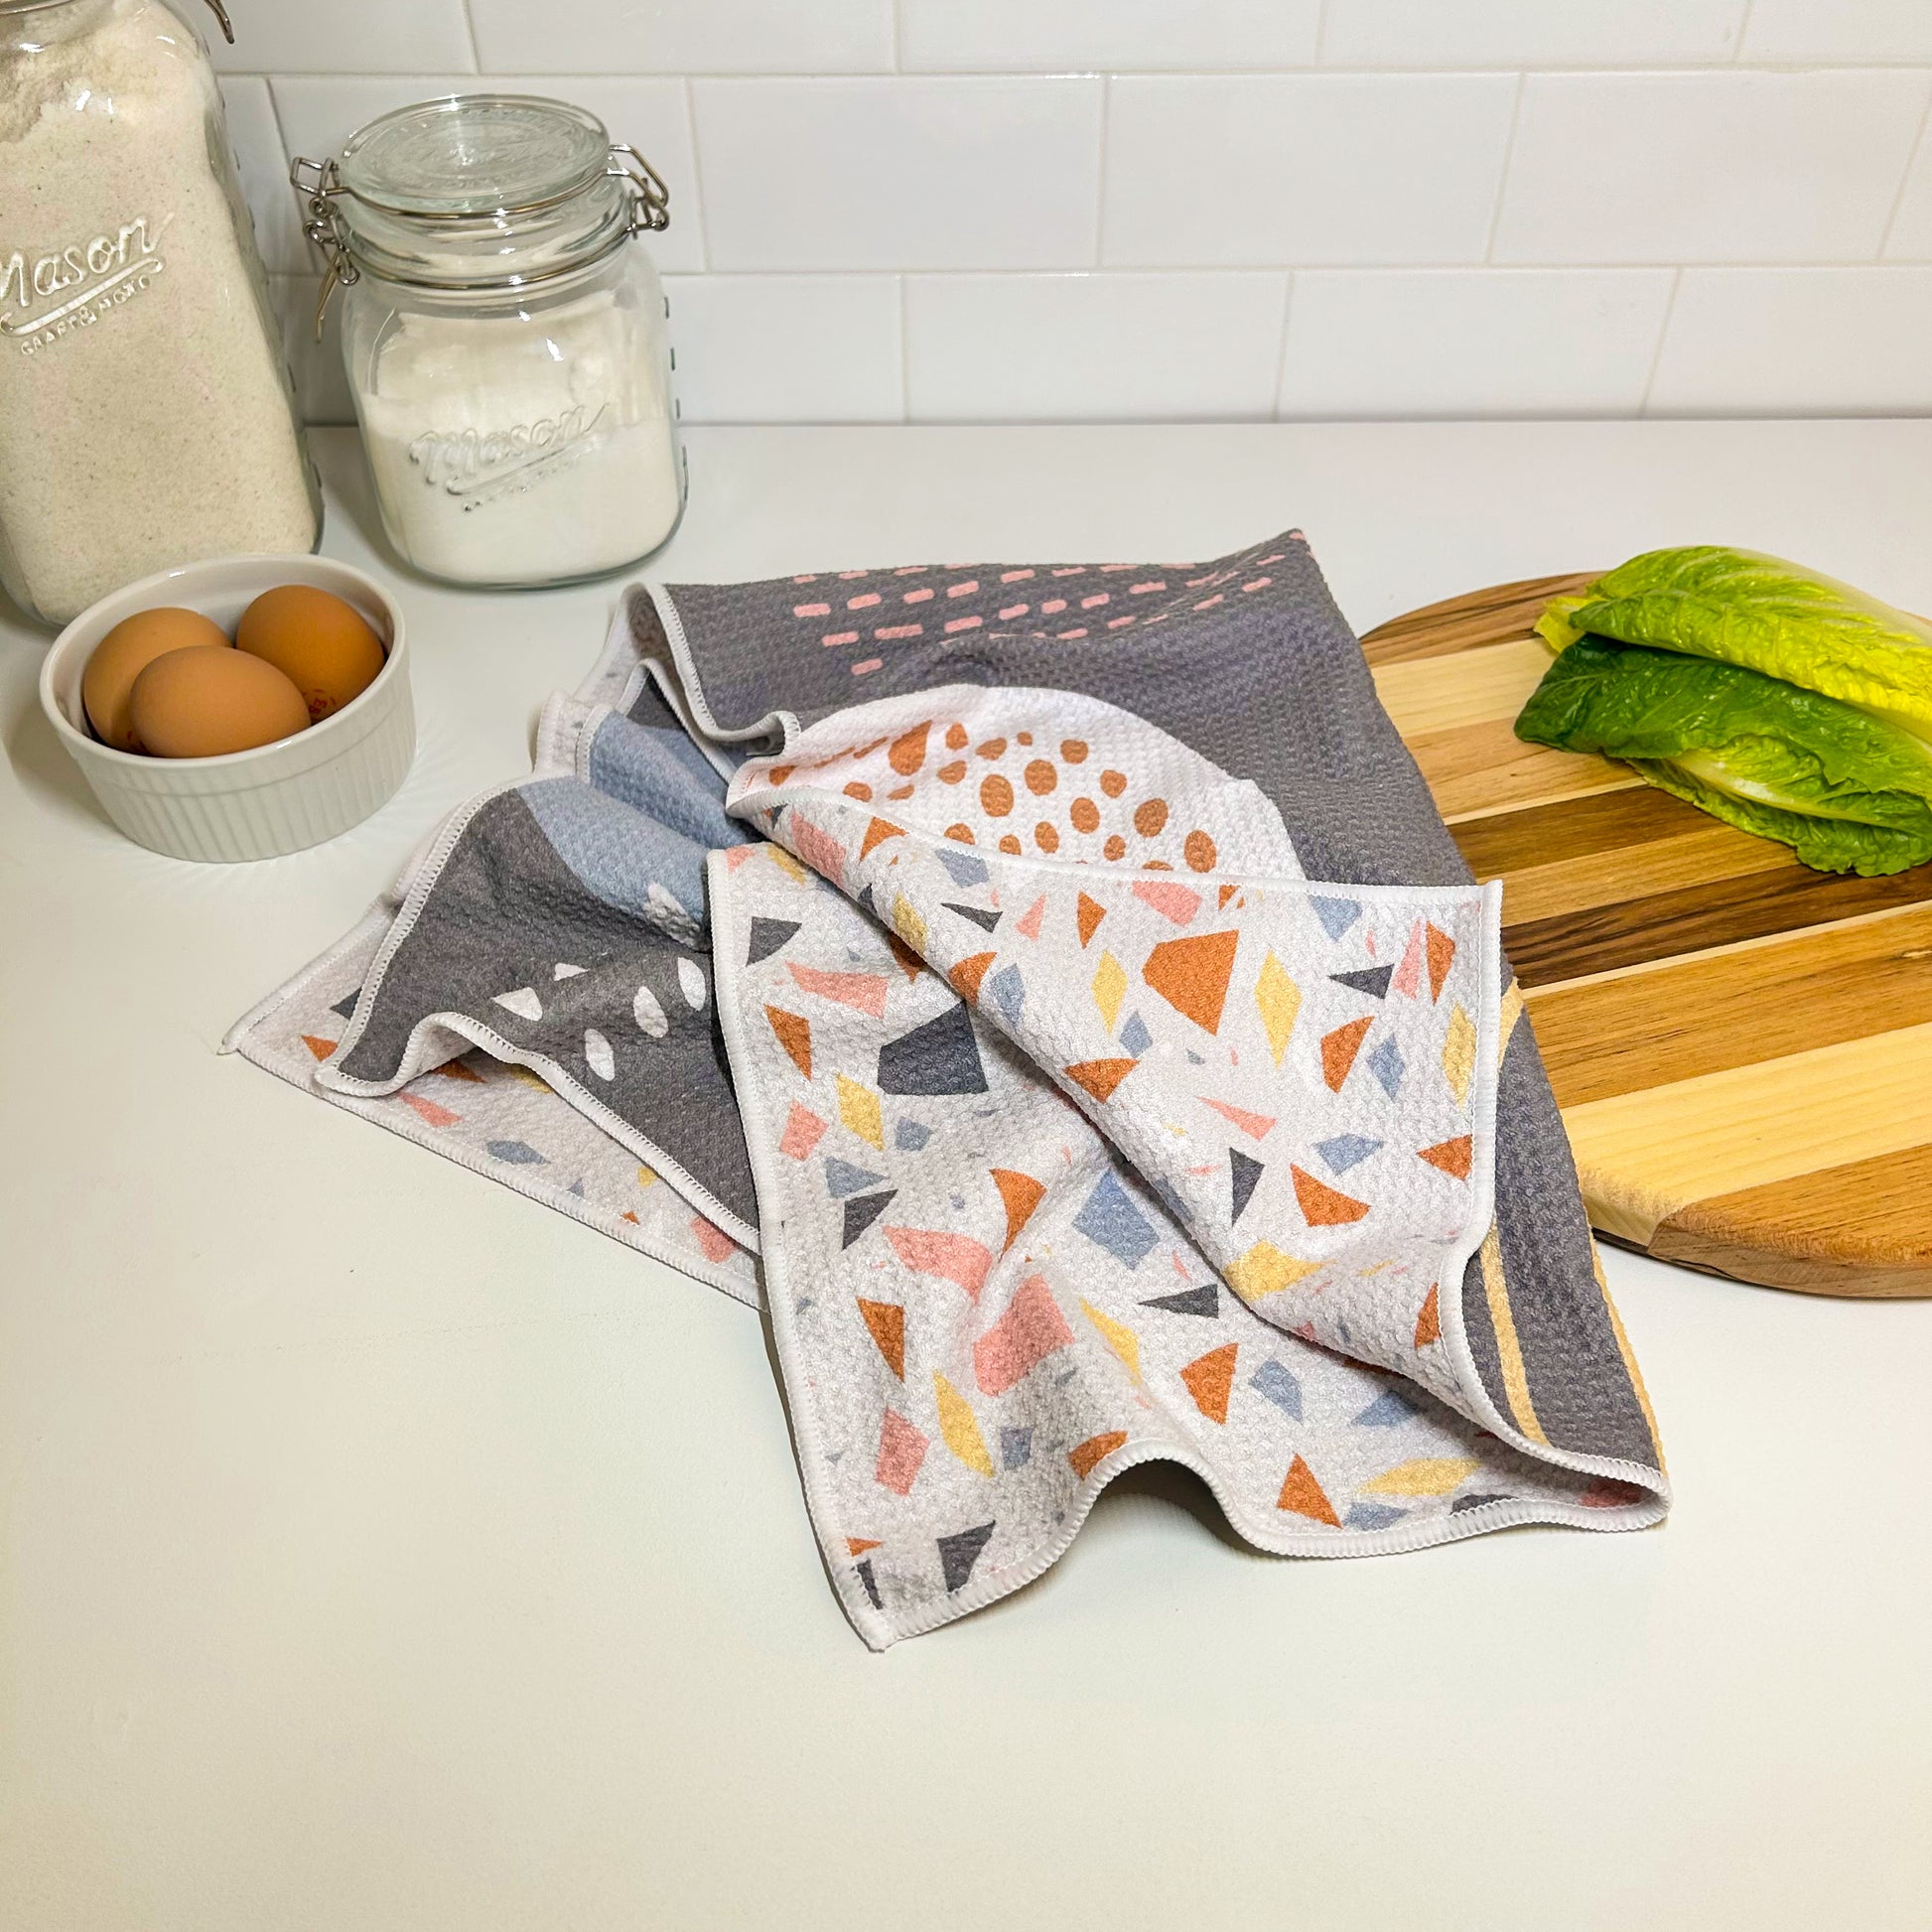 Boho Dish Towels - Iron Accents